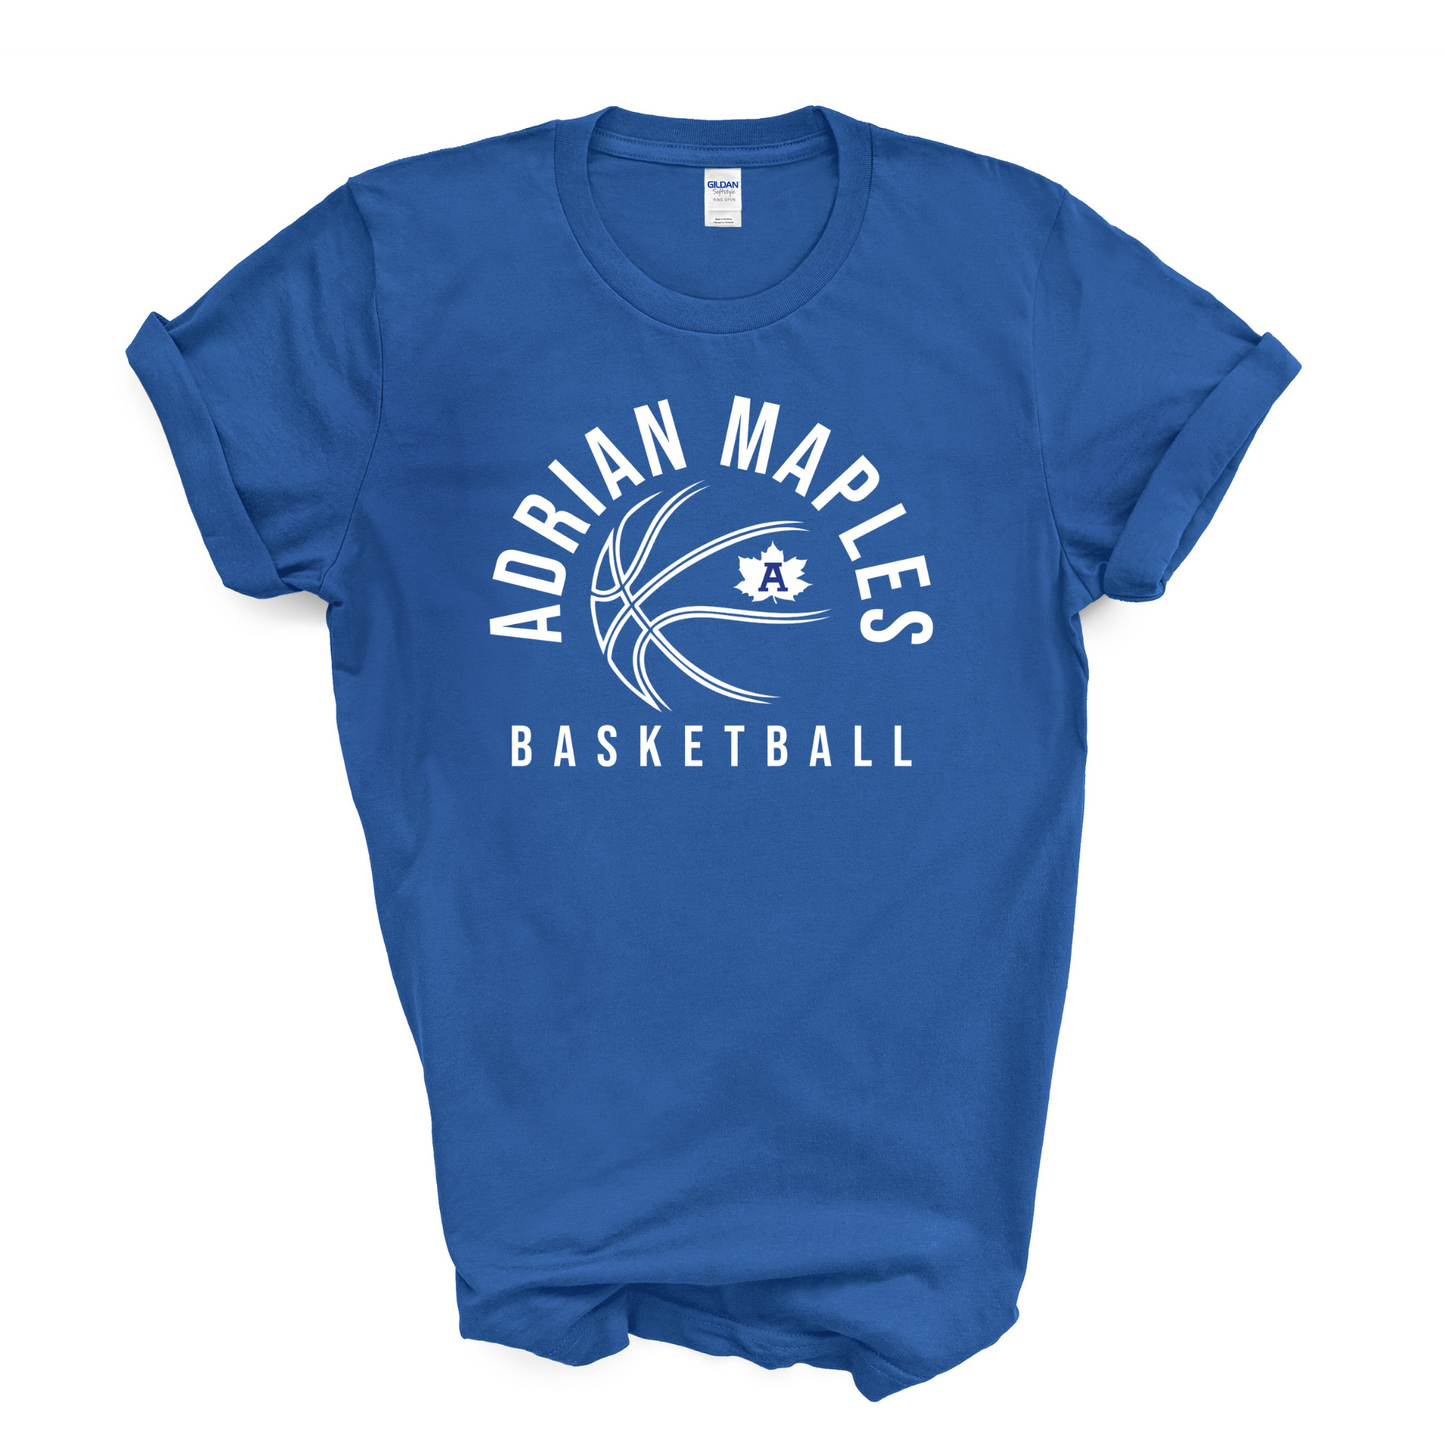 Adrian Maples Basketball T-Shirt